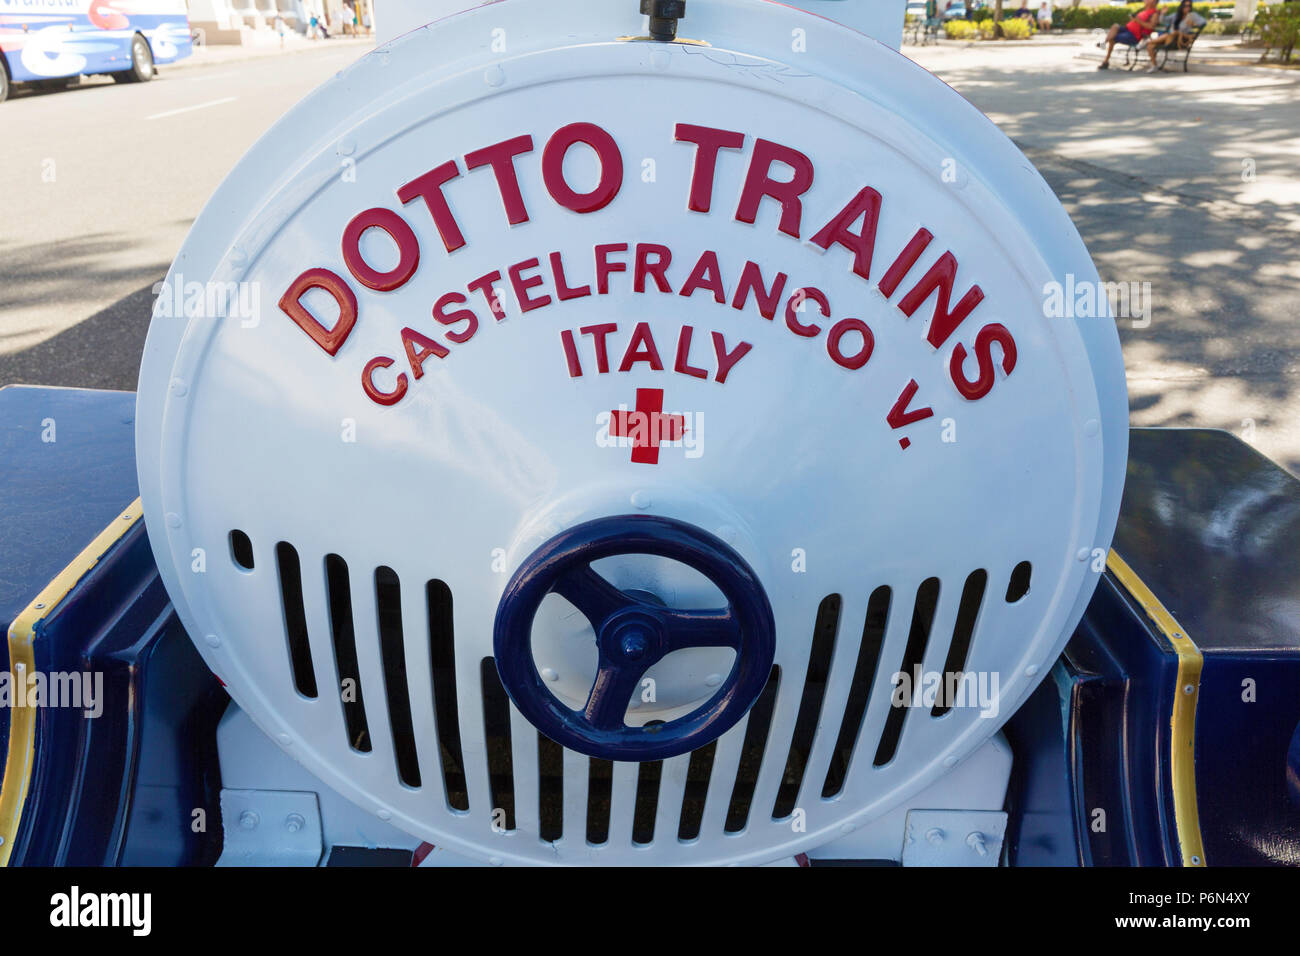 Tourist train built in Italy operating in Parque JoseÌ MartiÌ, Cienfuegos, Cuba Stock Photo